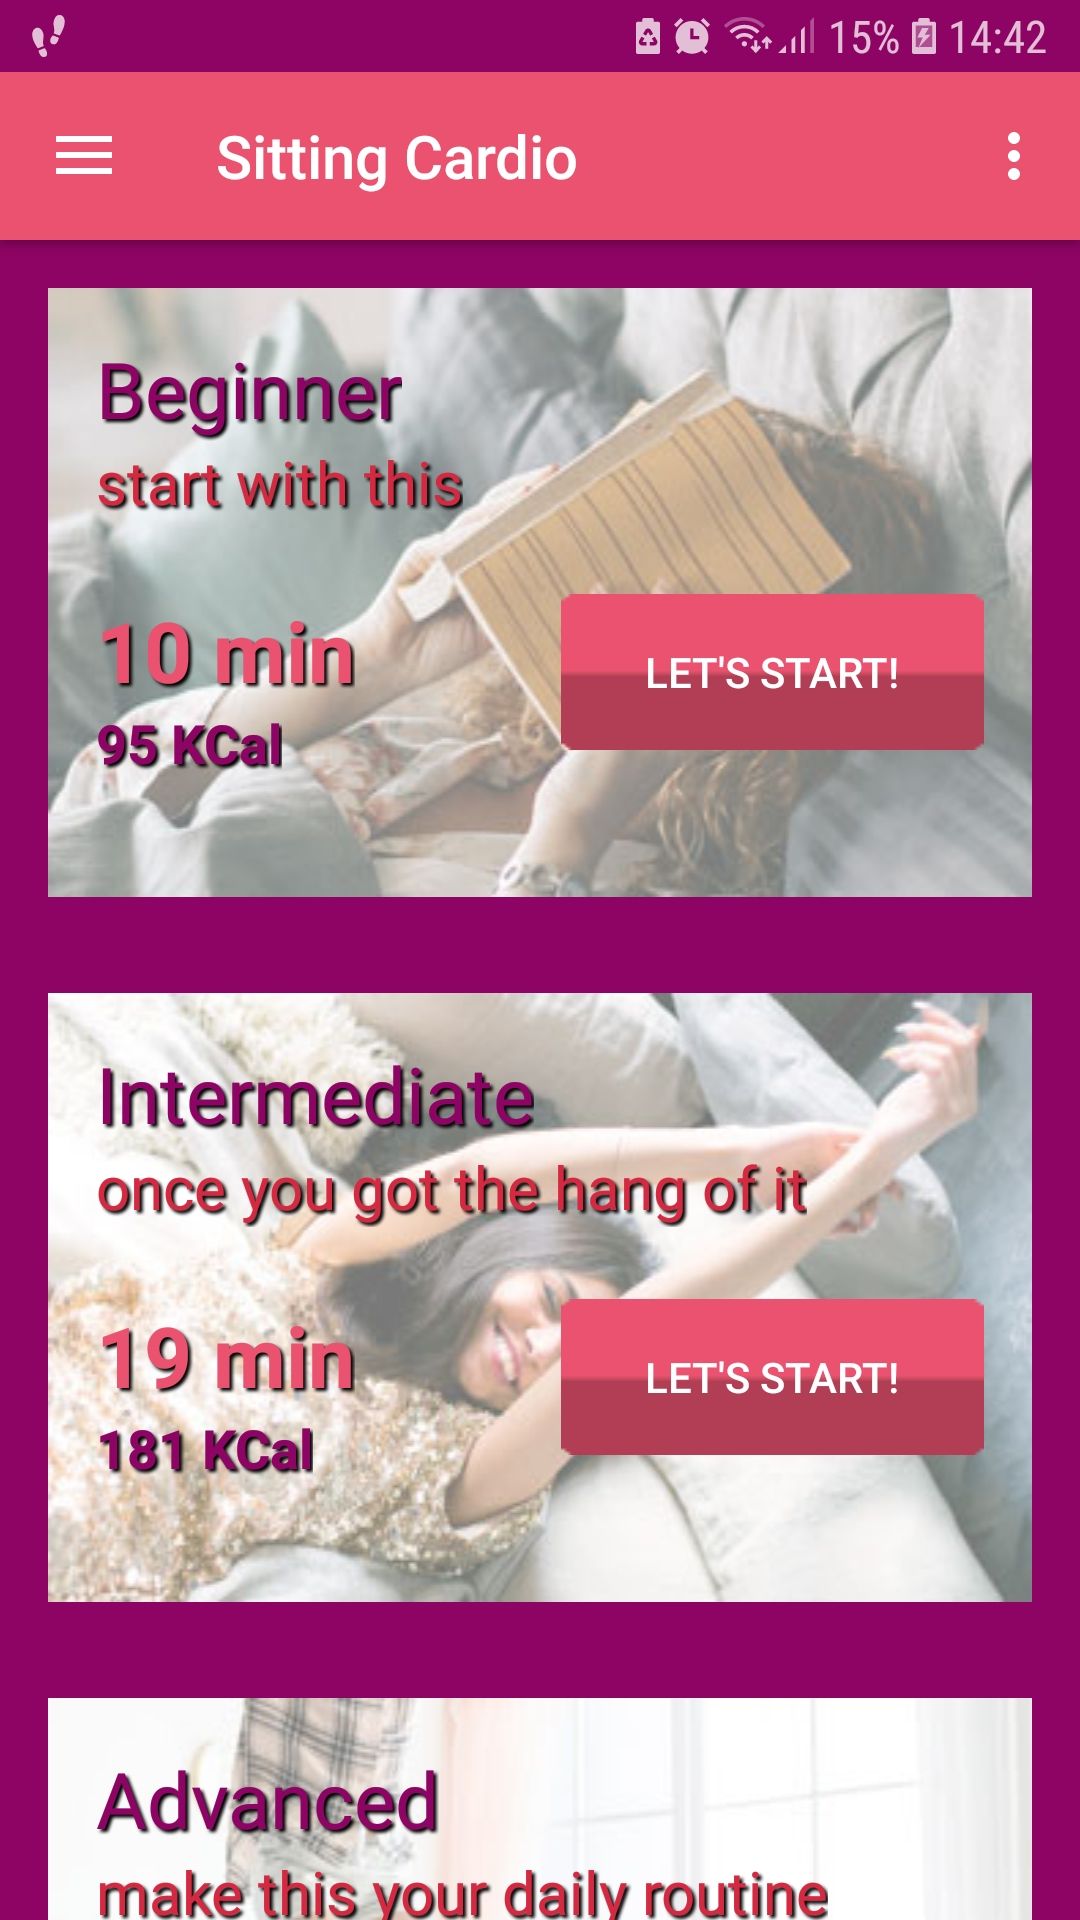 Sitting Cardio mobile exercise app